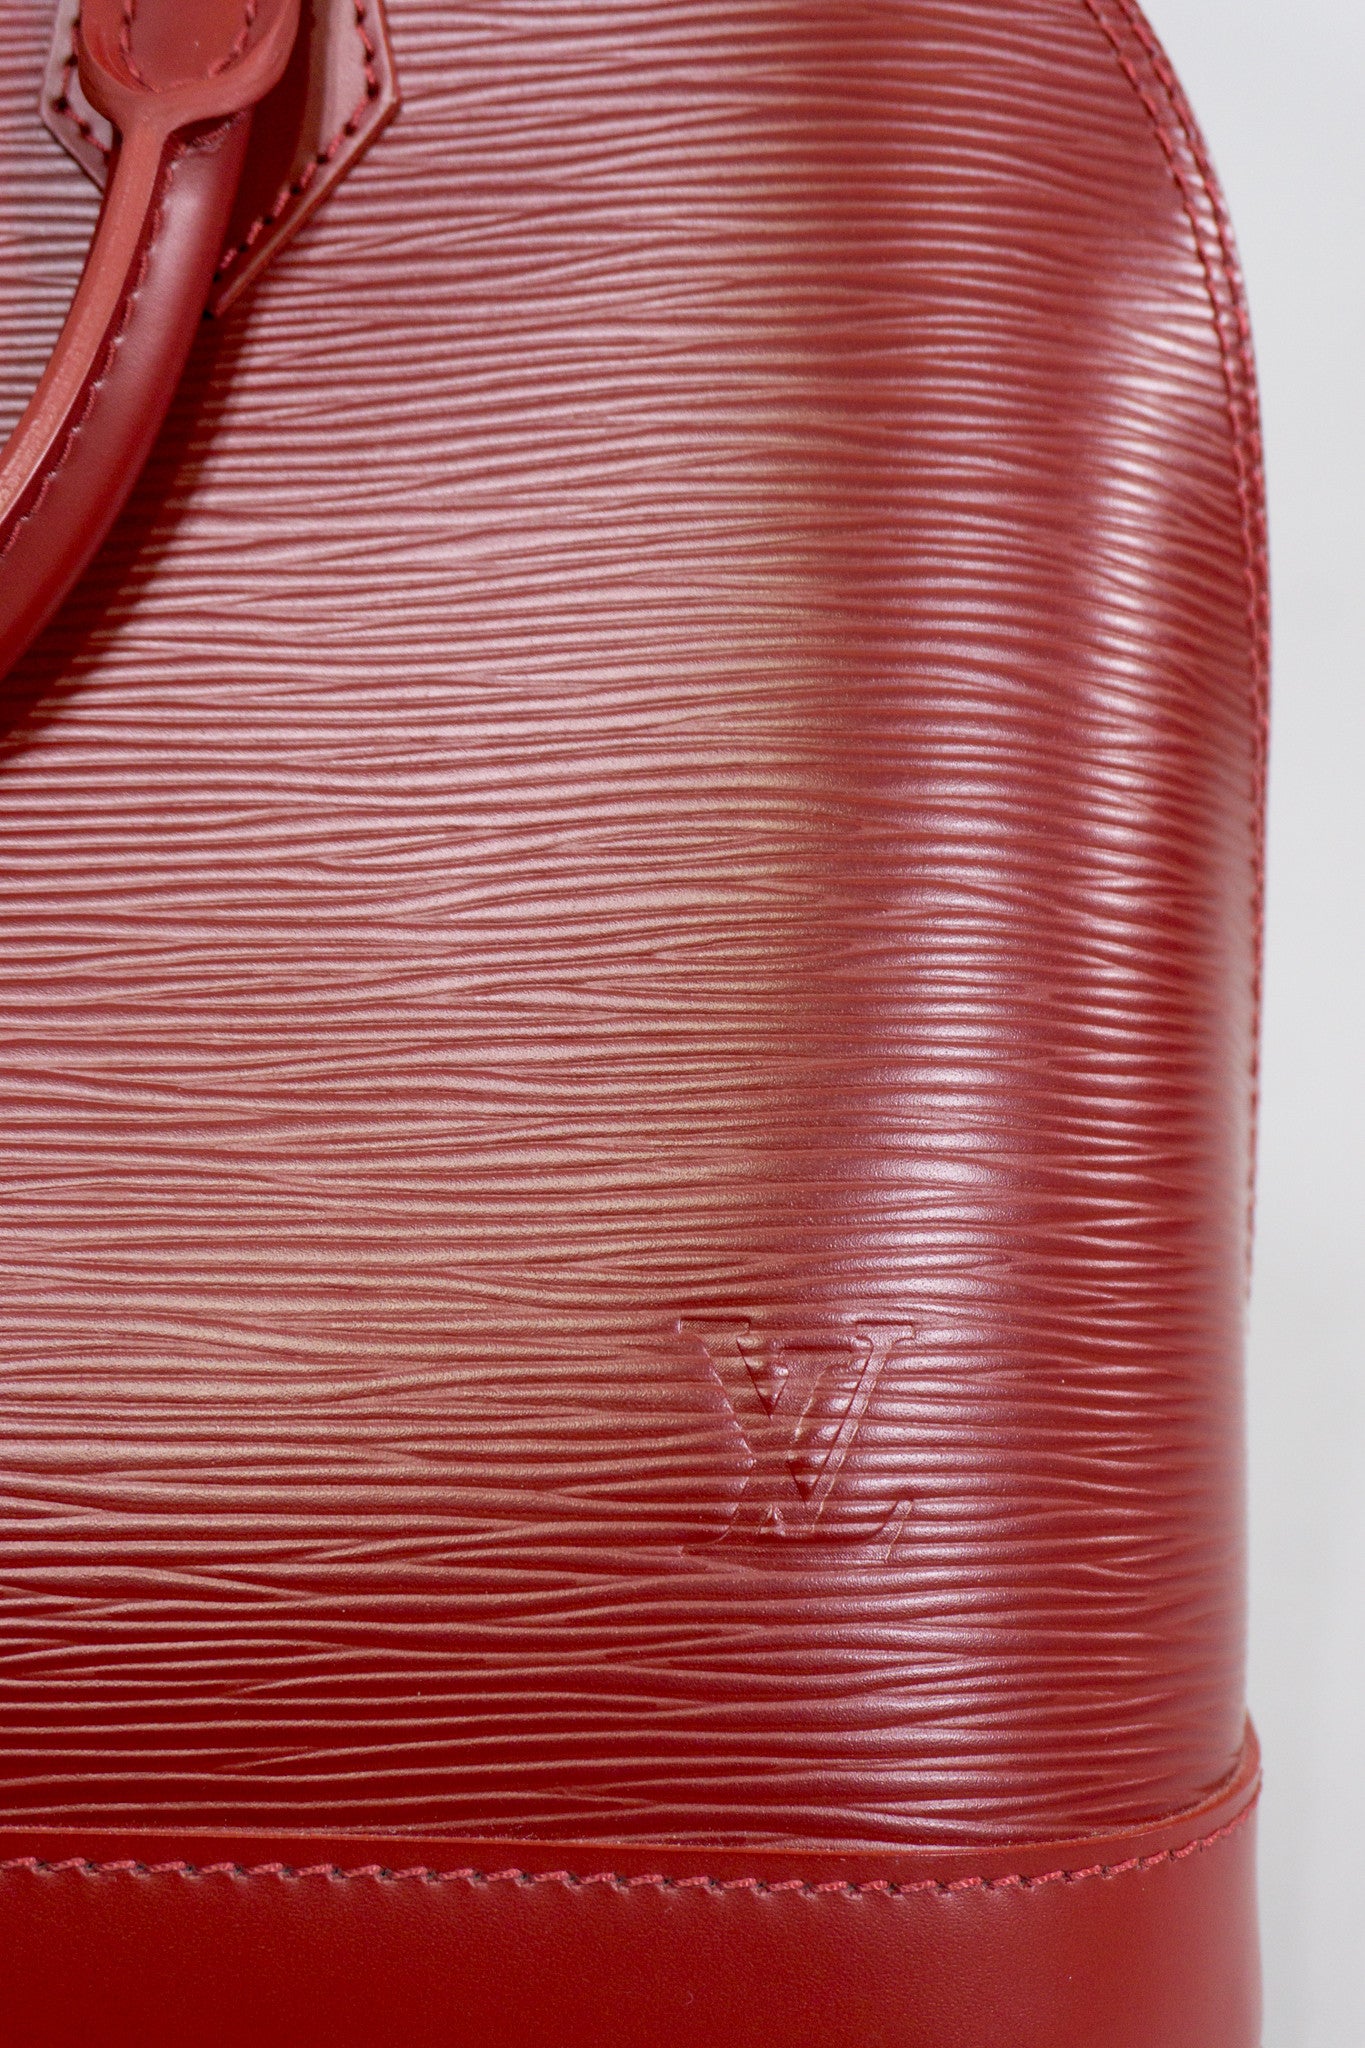 Louis Vuitton Epi Alma NM Handbag in Rubis Red